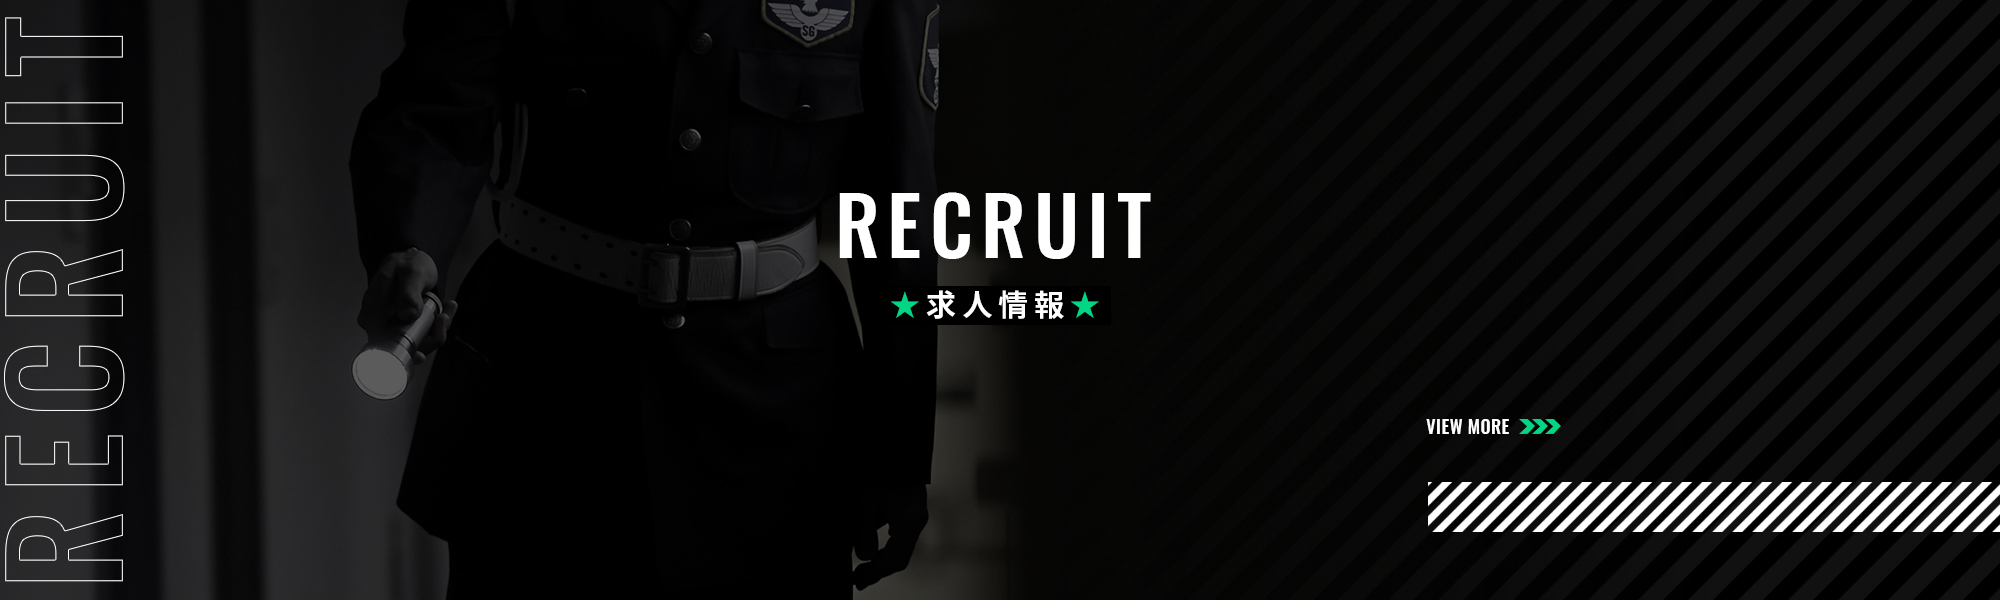 banner_recruit_def